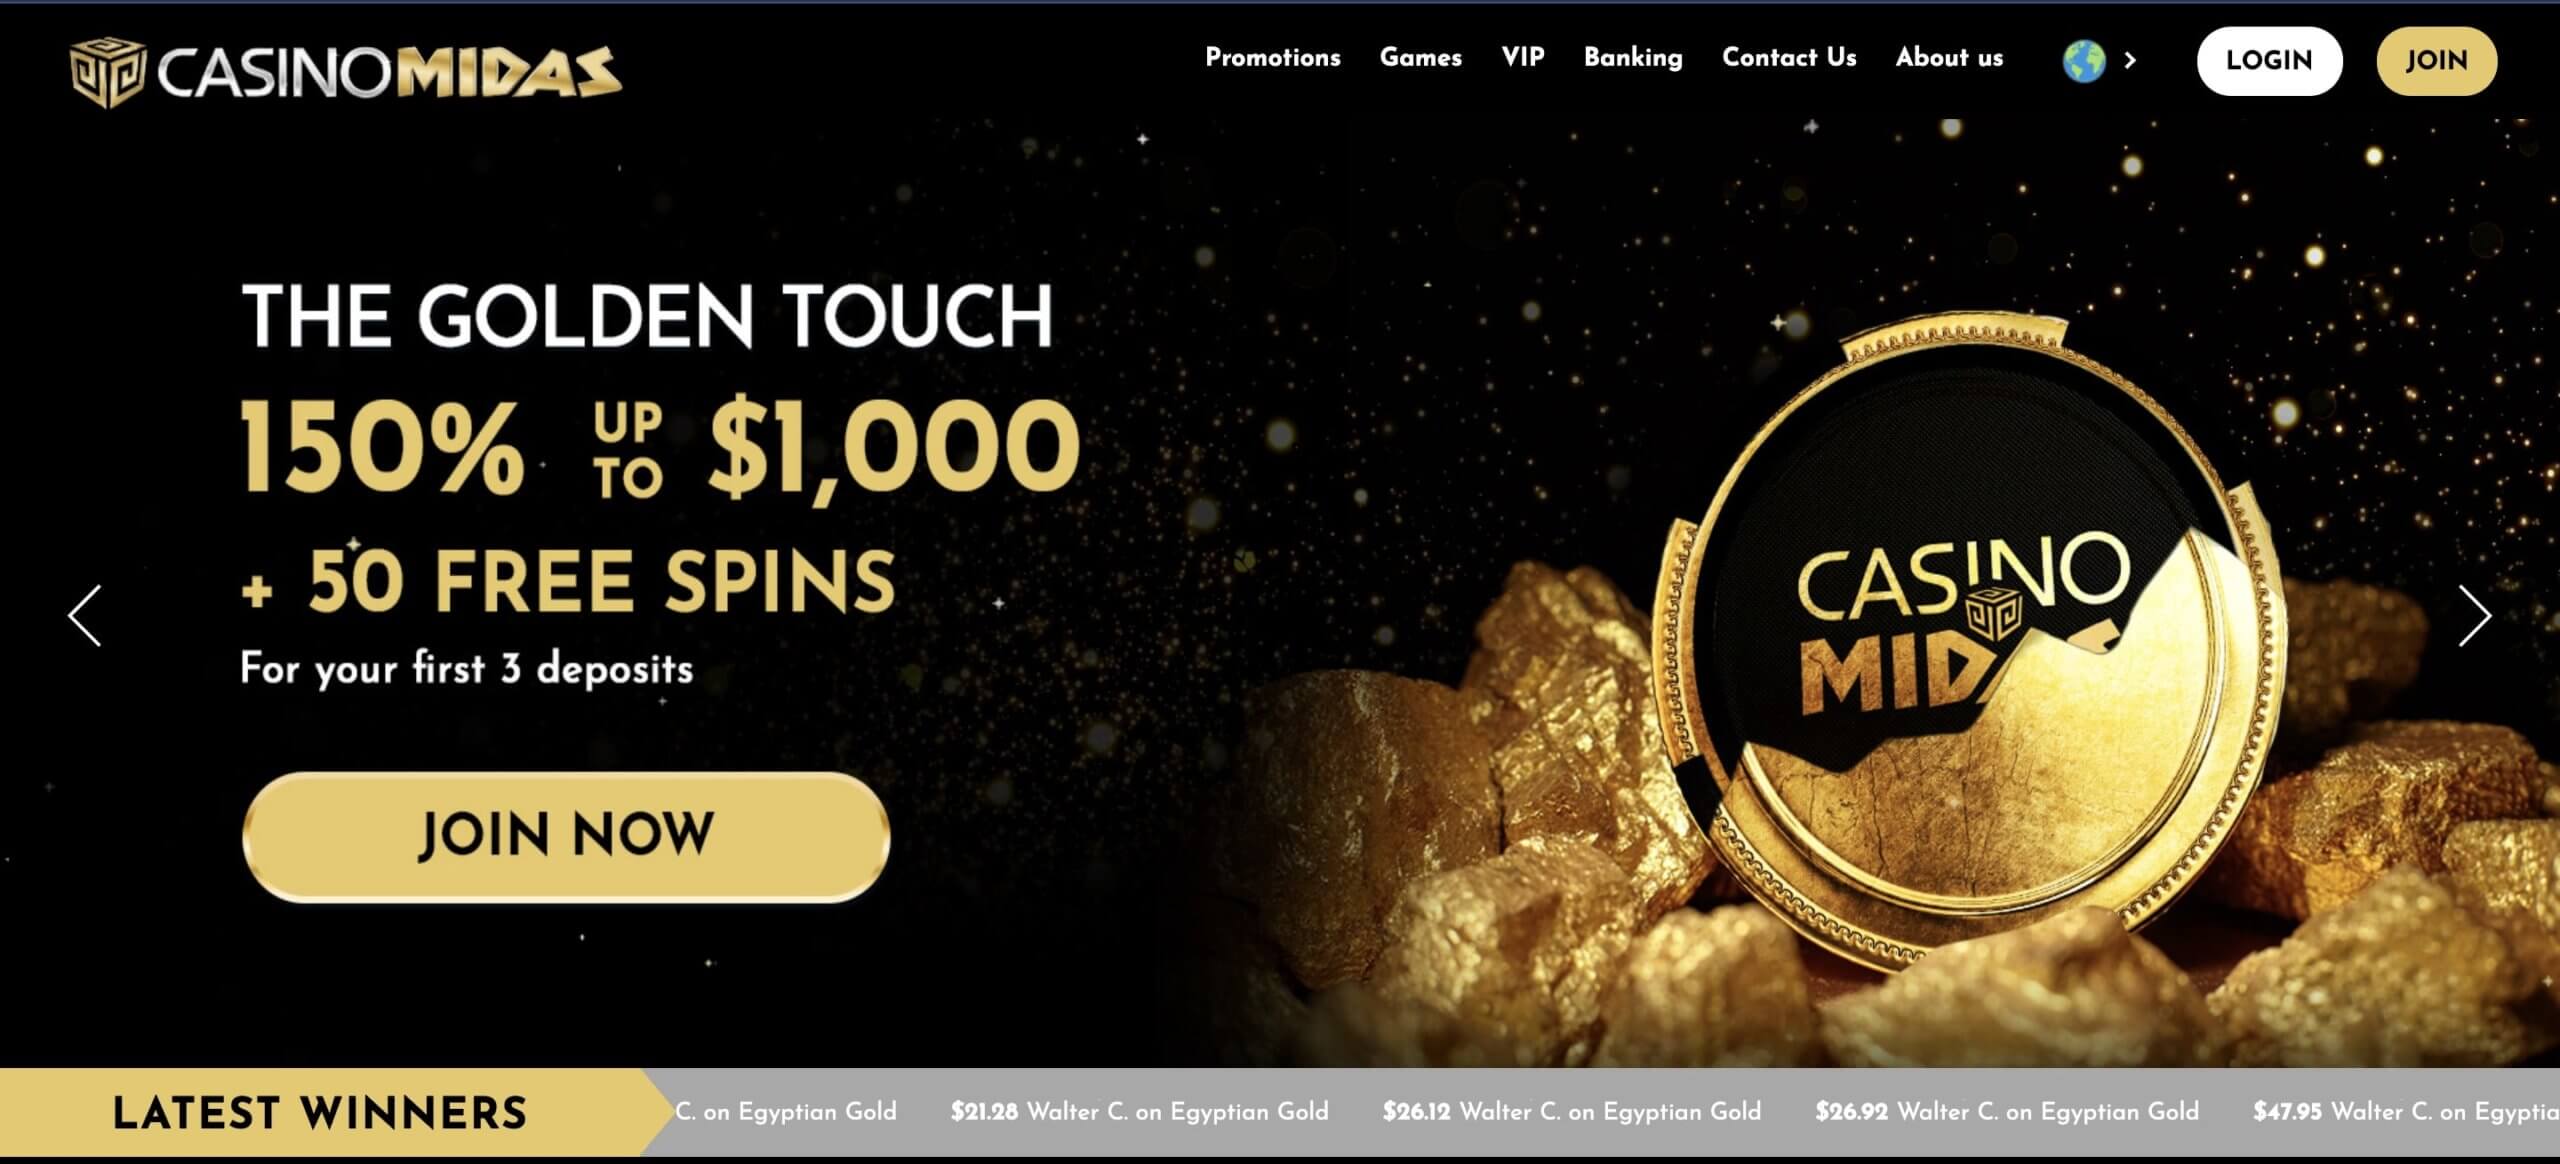 Casino Midas Philippines Review